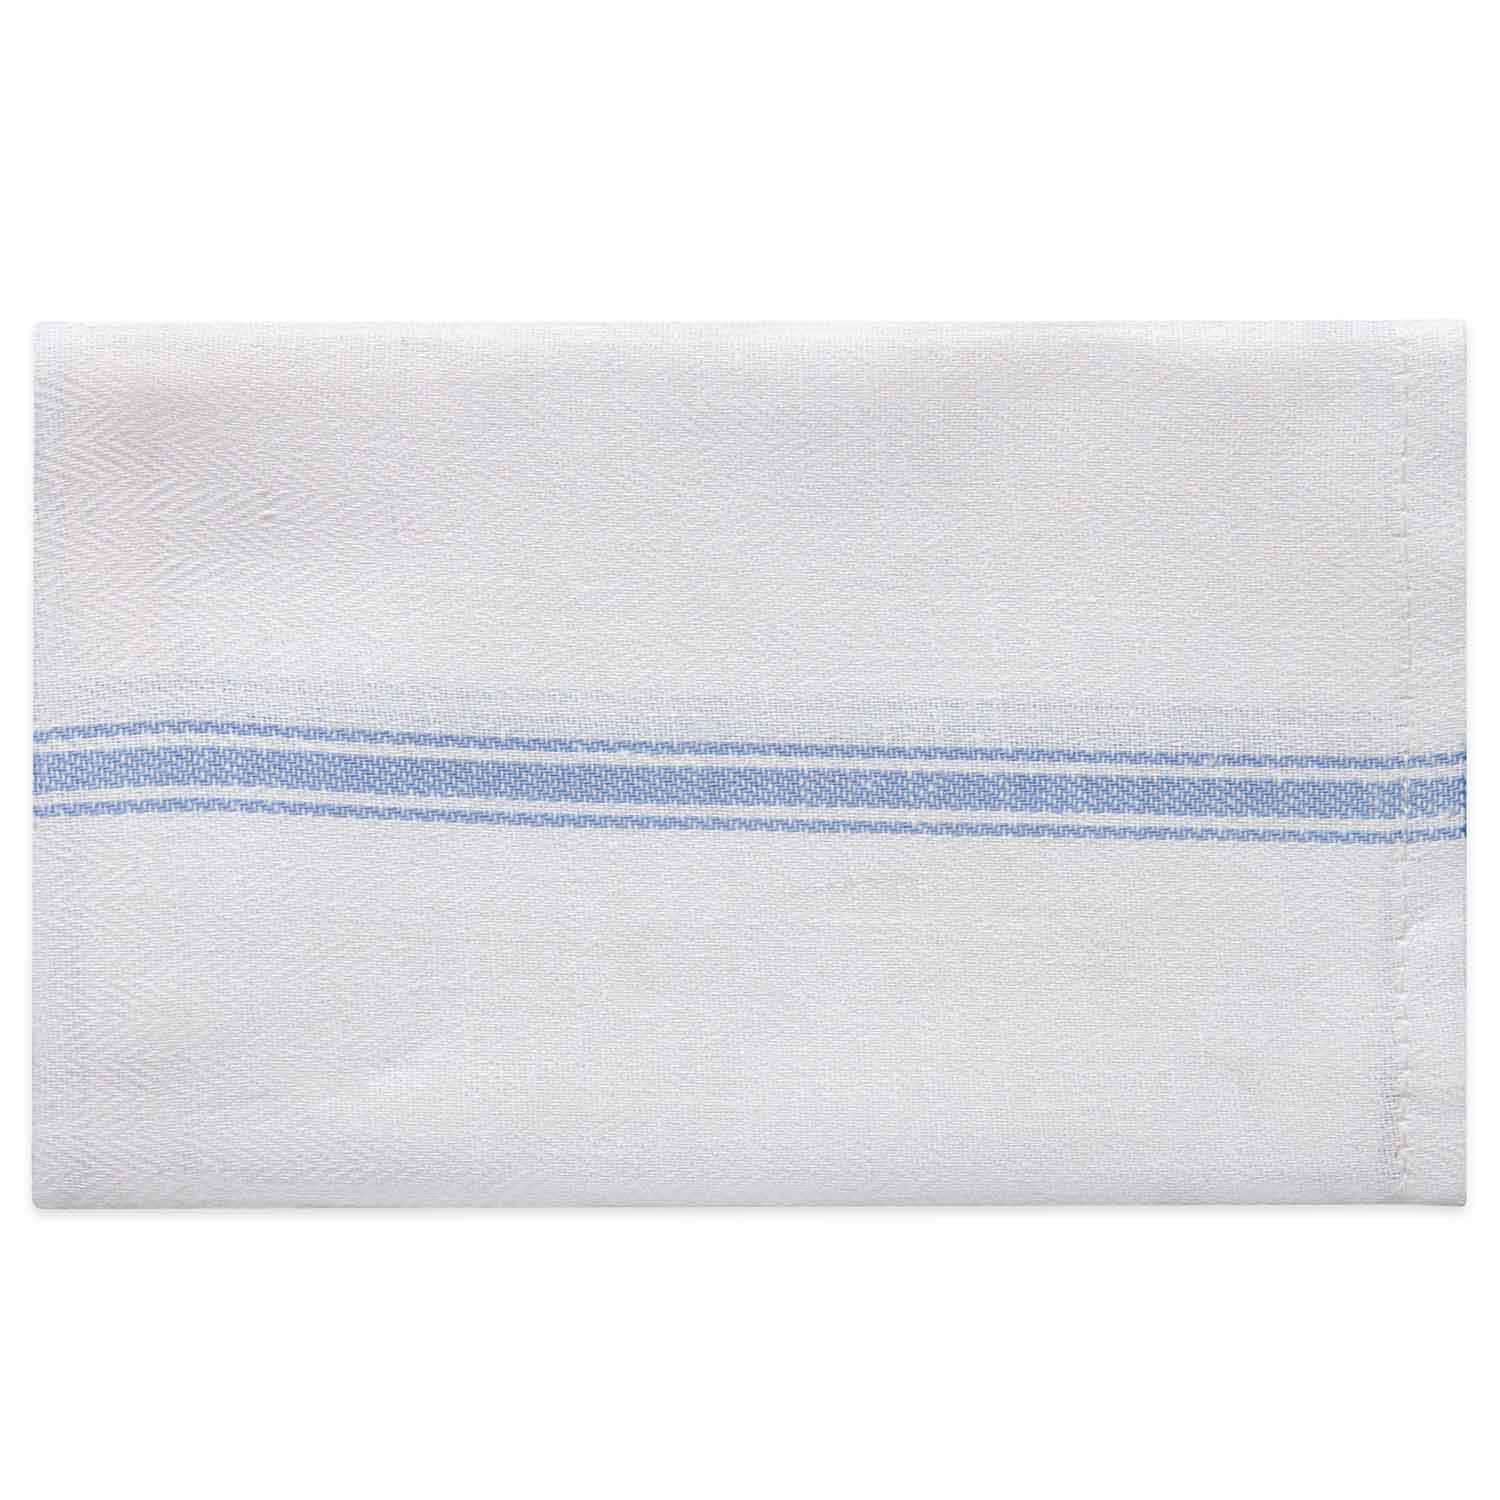 American Dawn | 15X26 Inch White With Blue Center Stripe Kitchen Towel